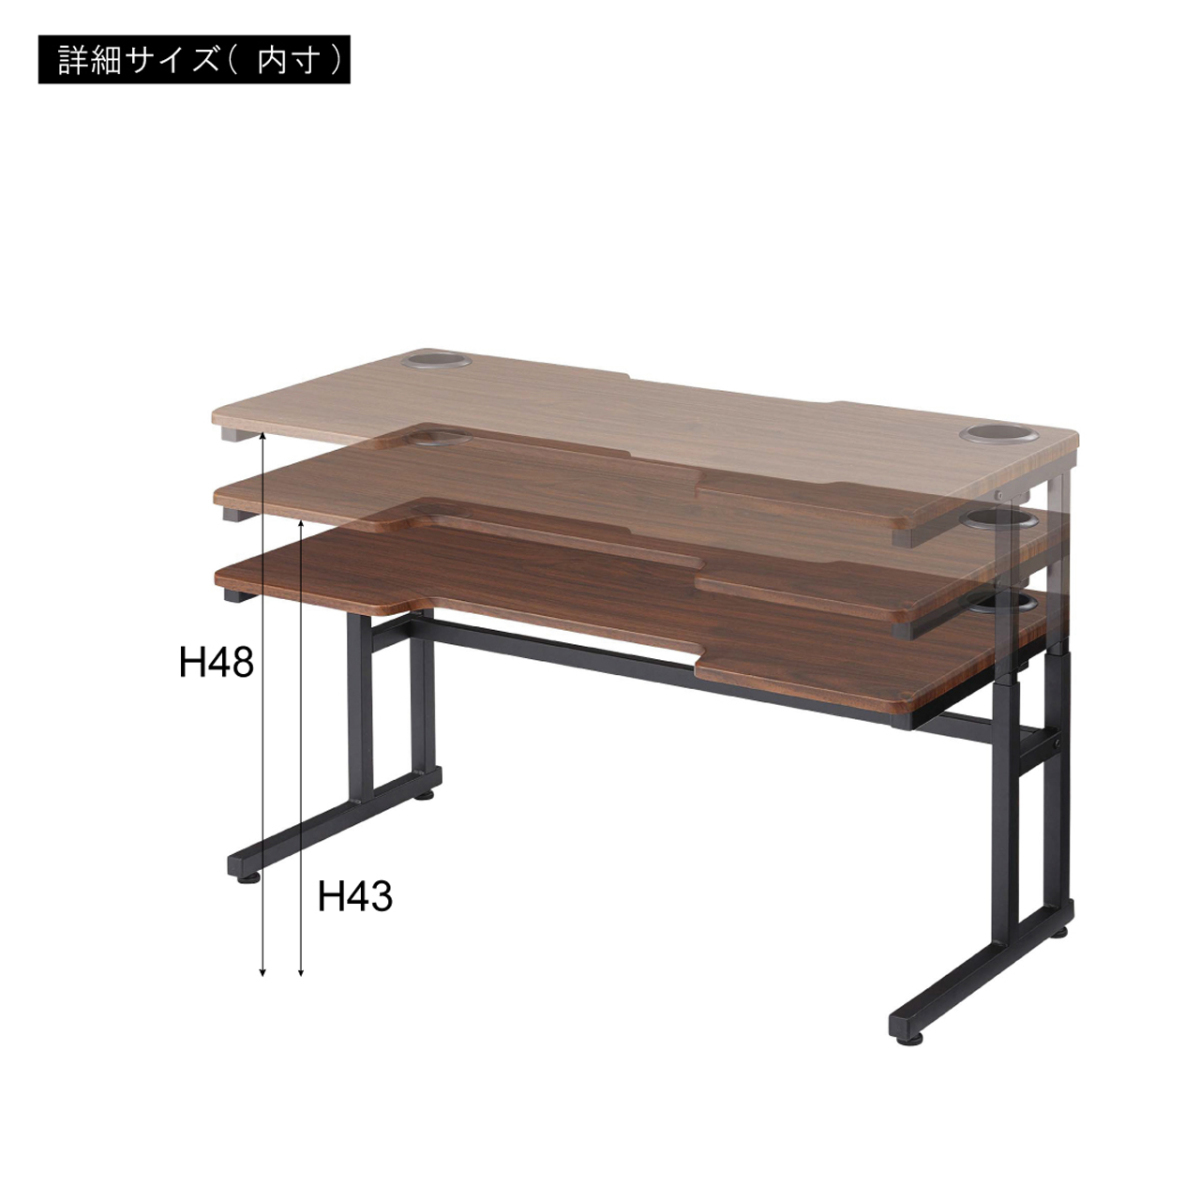 ge-ming desk computer desk low type width 90cm e sport height adjustment possibility AZ-PT-527BR